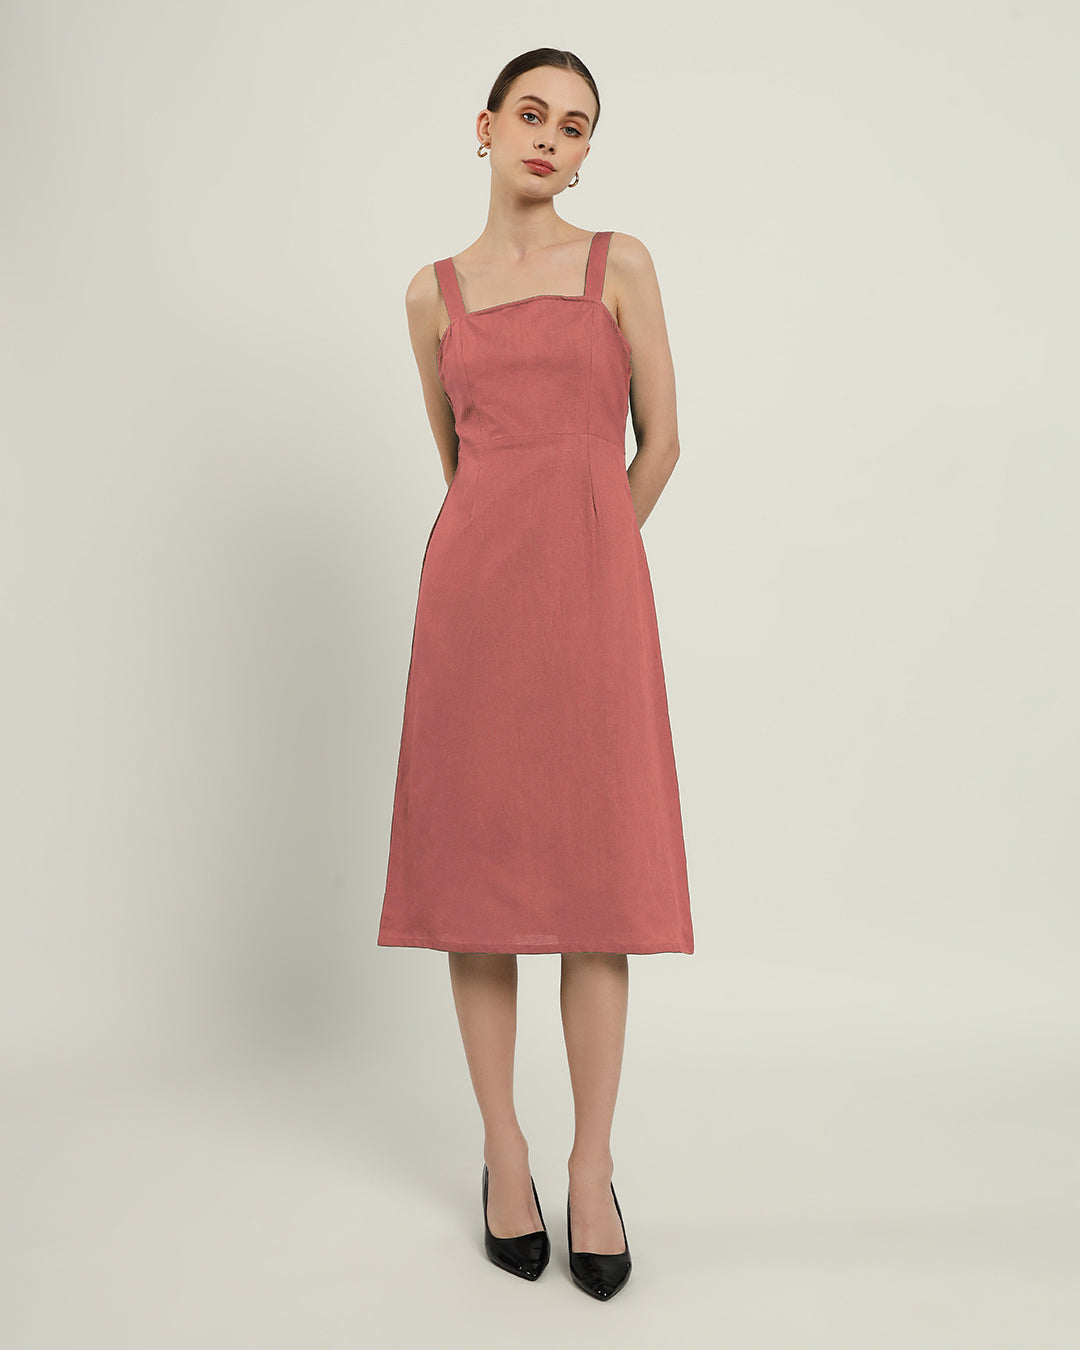 The Samara Ivory Pink Cotton Dress